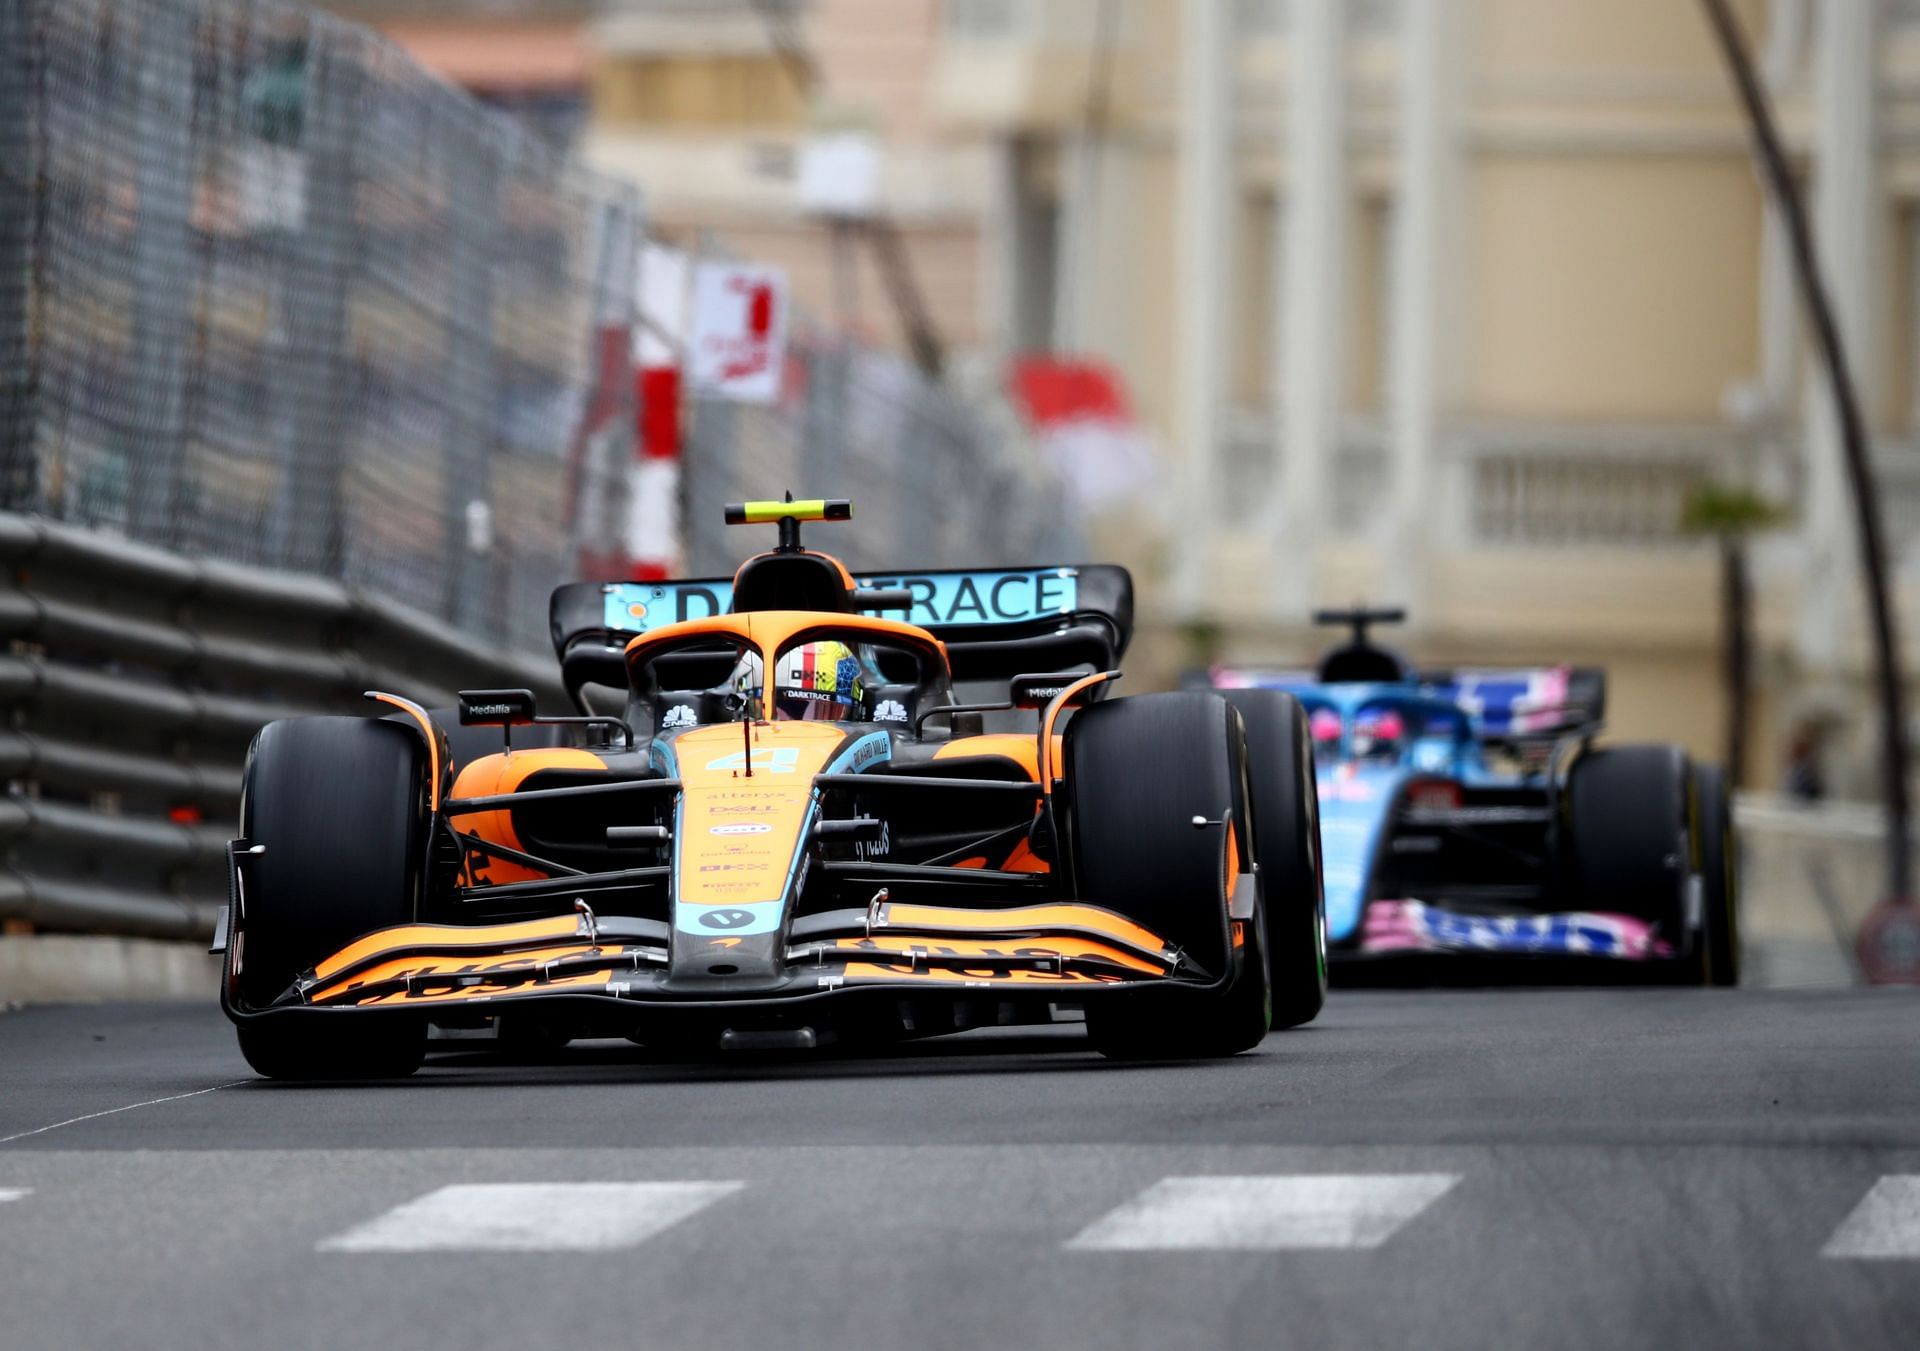 Lando Norris at the F1 Grand Prix of Monaco